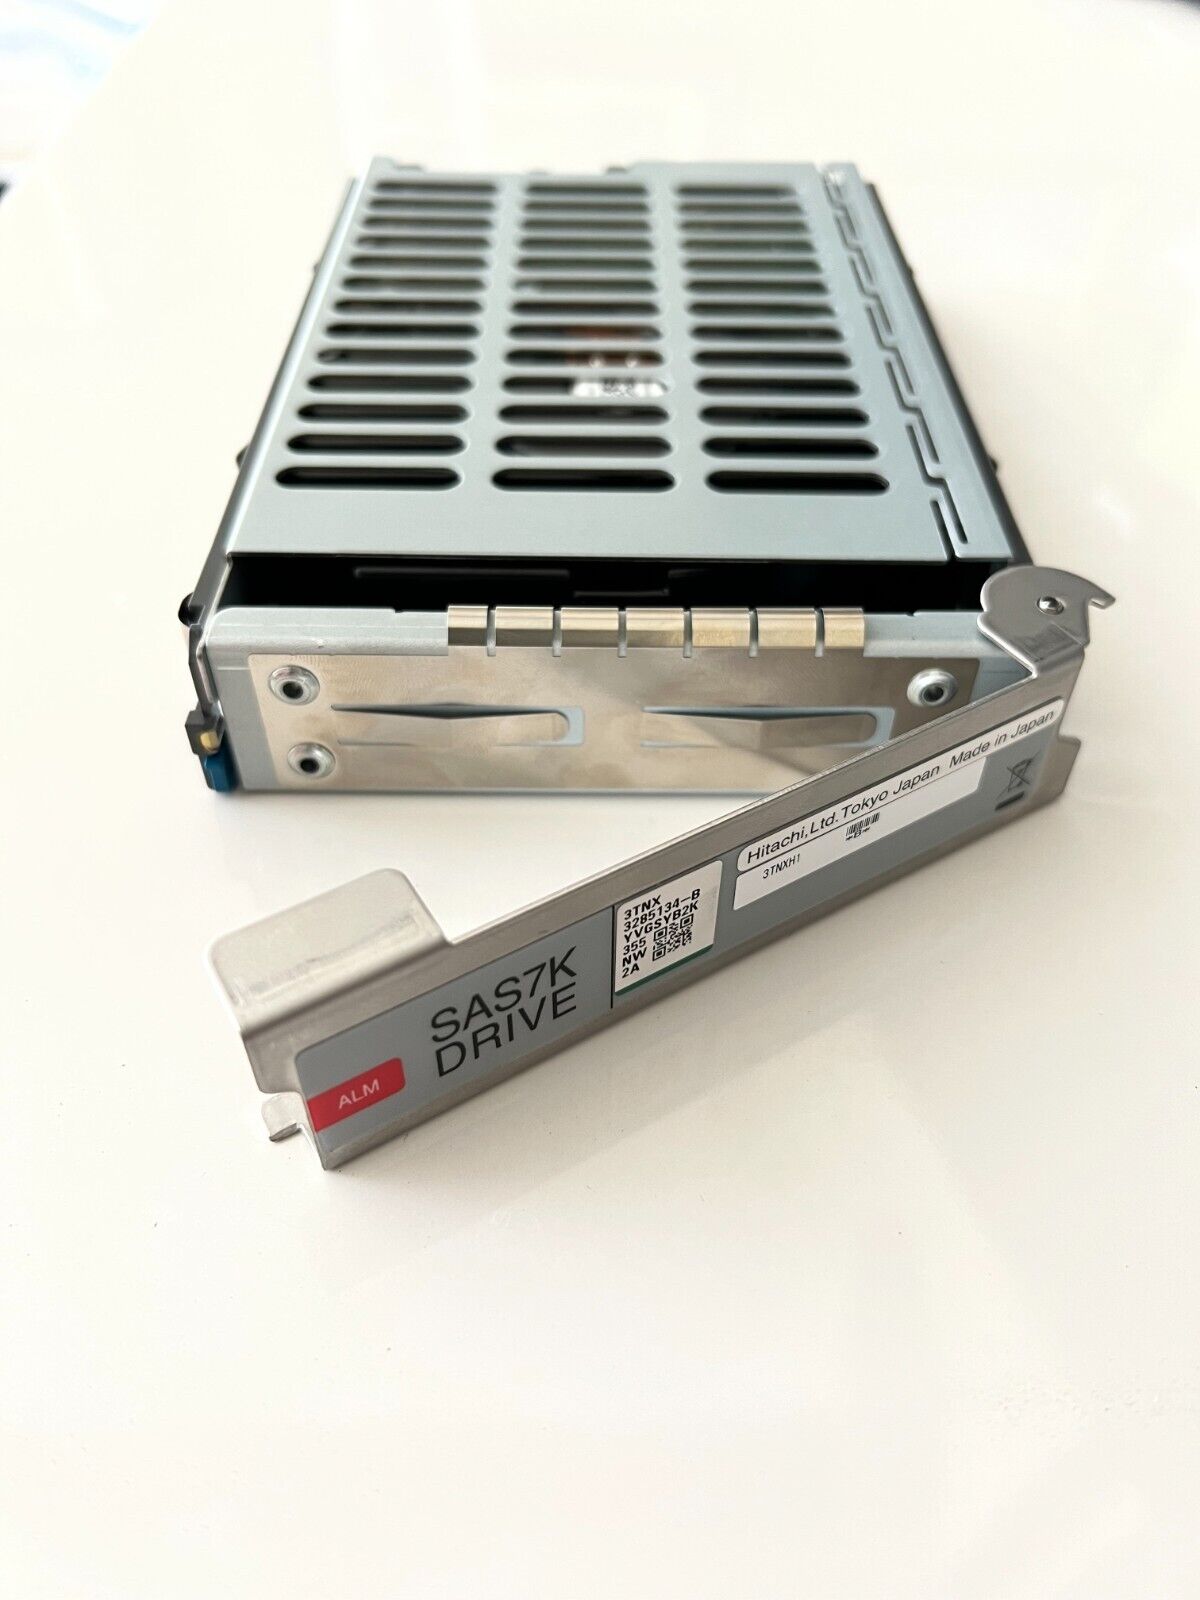 Hitachi 3.5” 3TB 7.2K SAS 6Gb/s 64MB Cache HDD Ultrastar SAS HUS723030ALS640